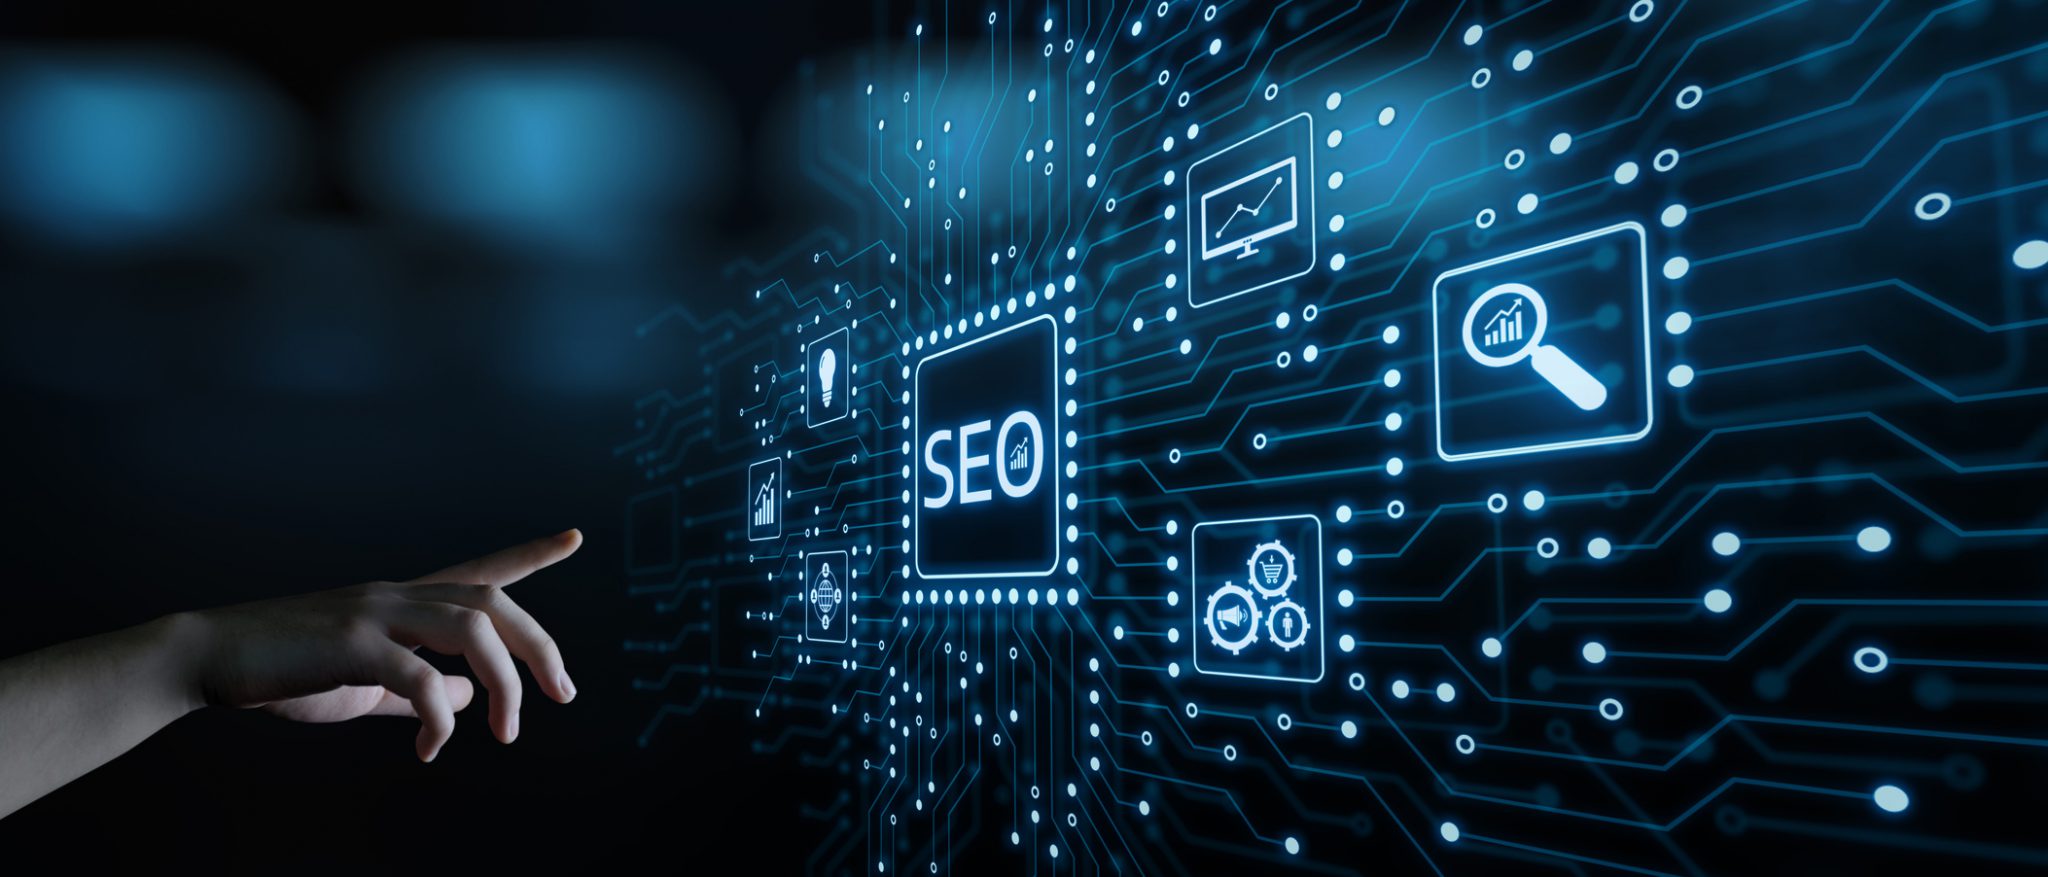 enterprise SEO Search Engine Optimization Marketing Ranking Traffic Website Internet Business Technology Concept.